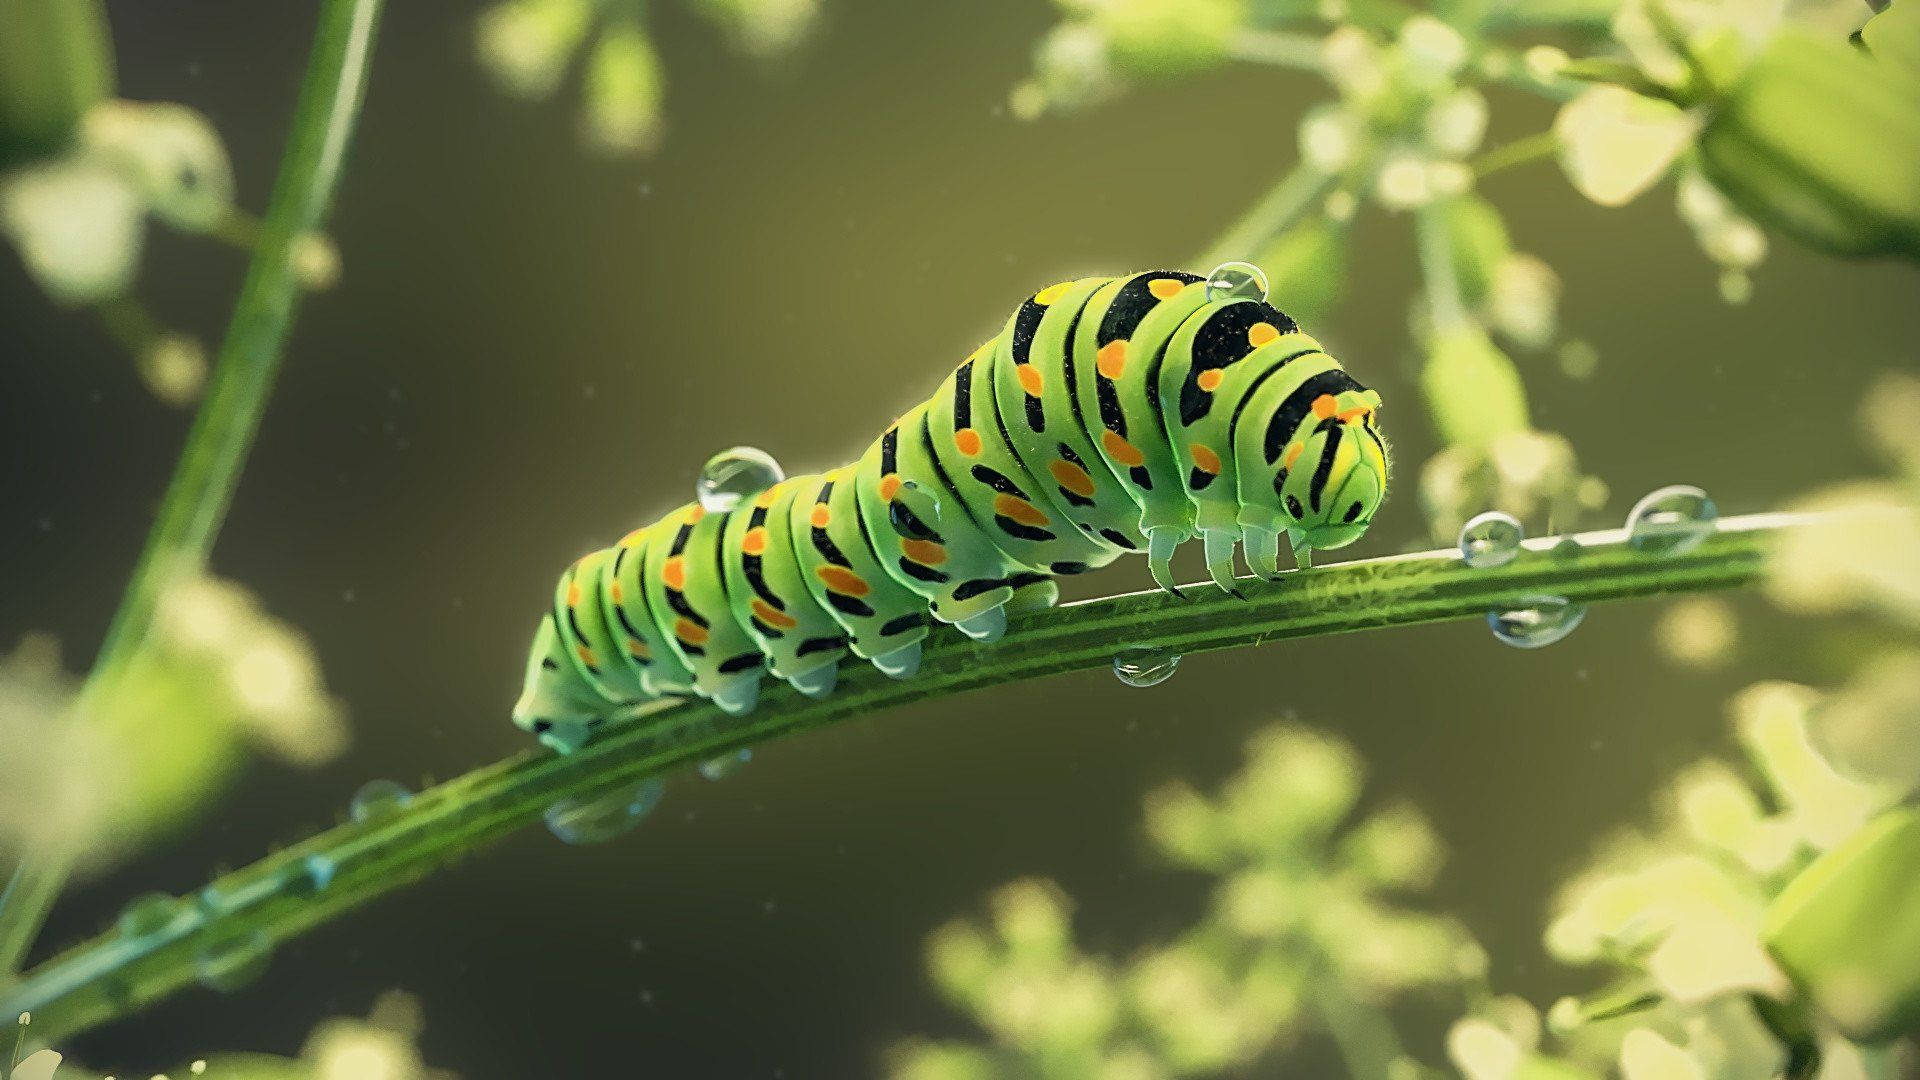 Caterpillar In Wet Green Stem